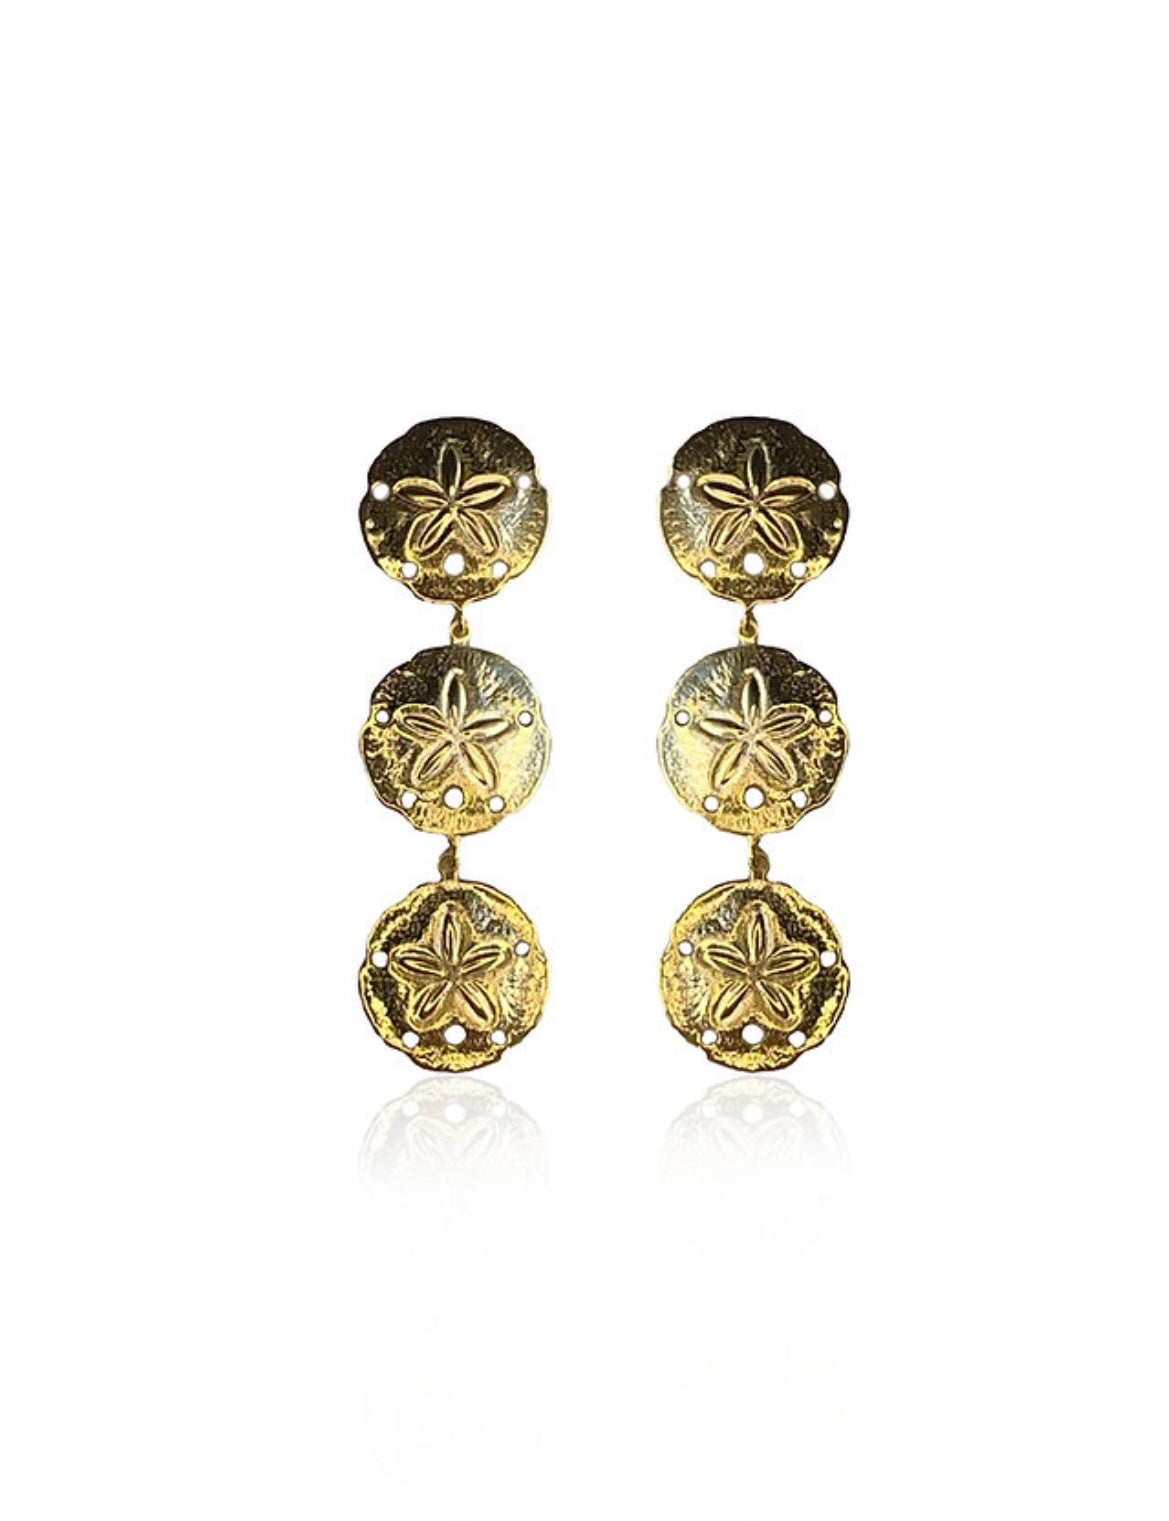 Phigalia earrings